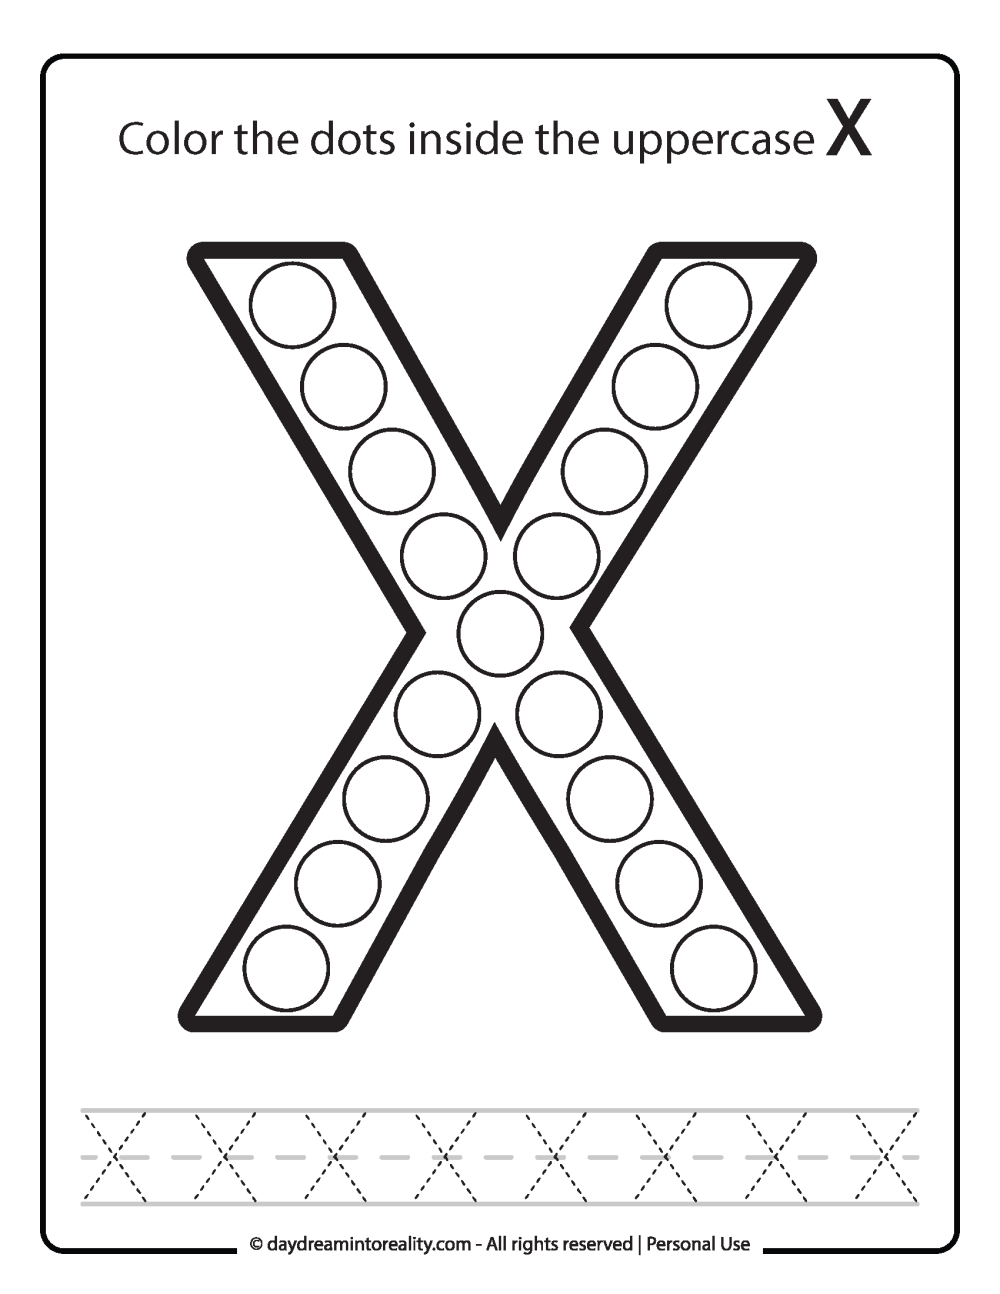 Uppercase "X" Dot Marker Worksheet Free Printable activity for kids (preschool, kindergarten)